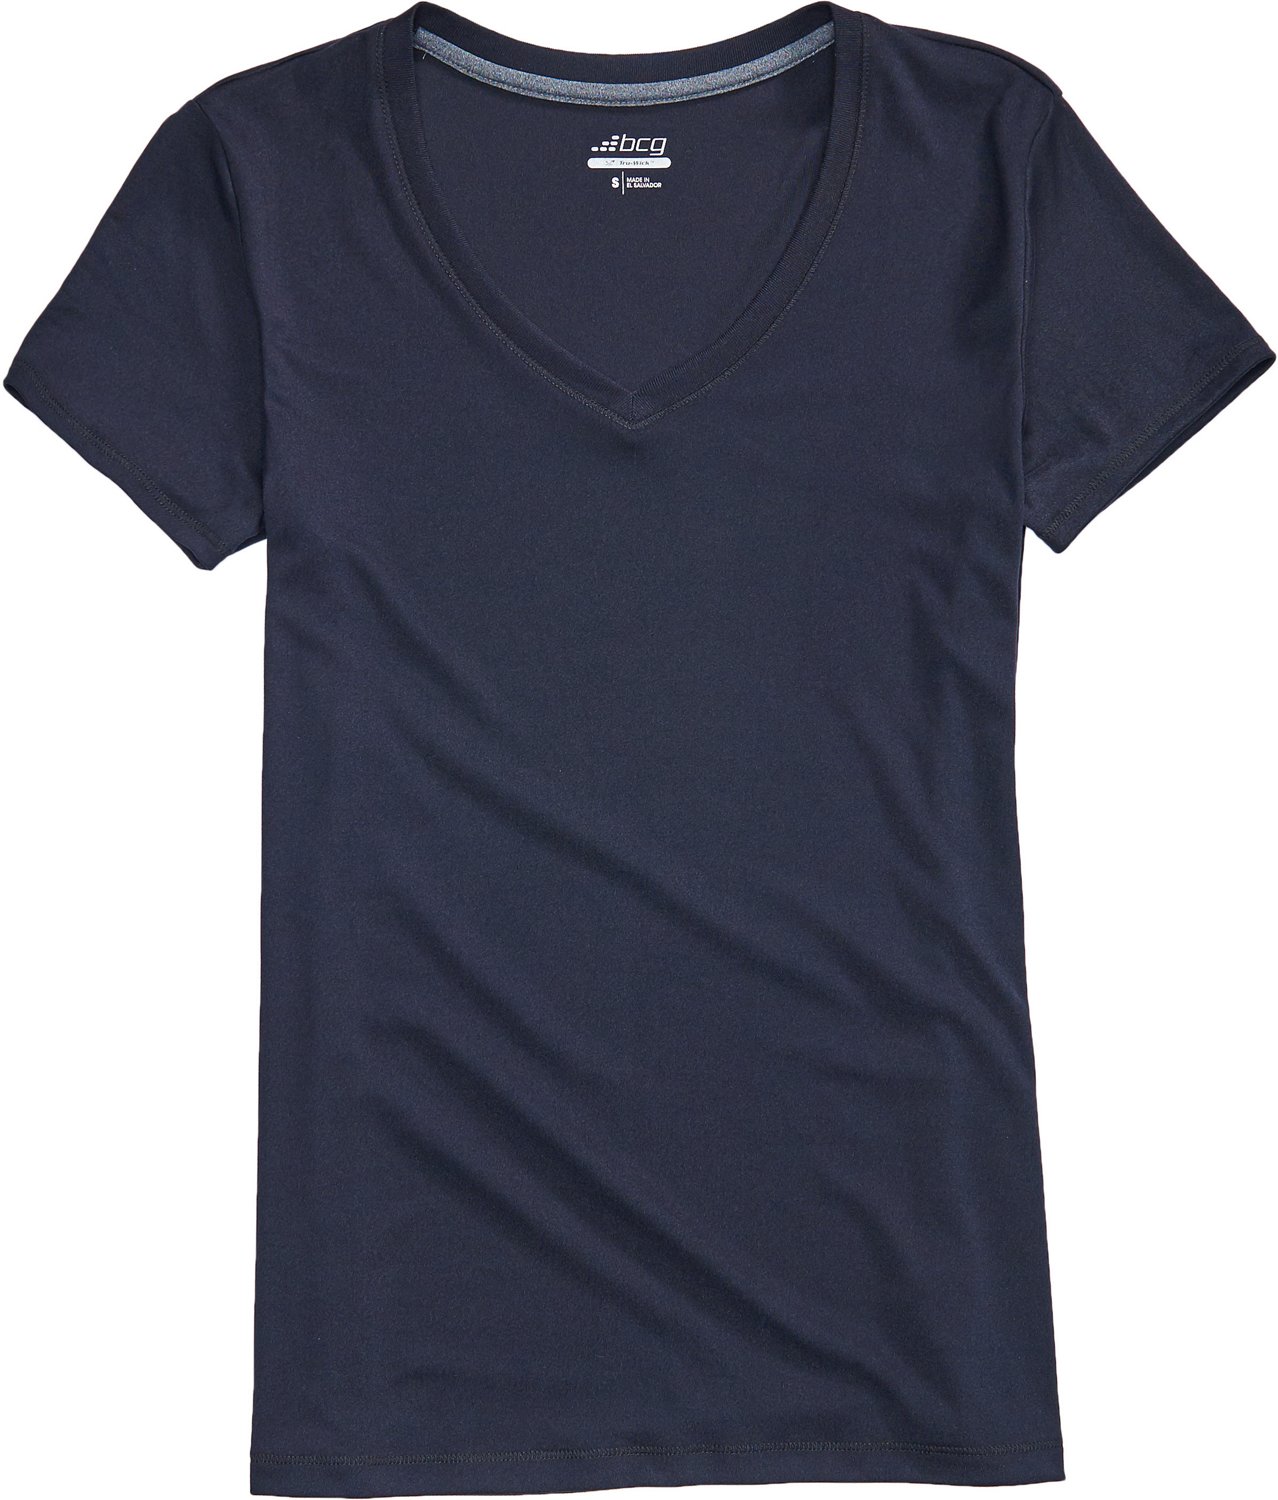 BCG Women's Training Solid Short Sleeve V-neck Tech T-shirt | Academy